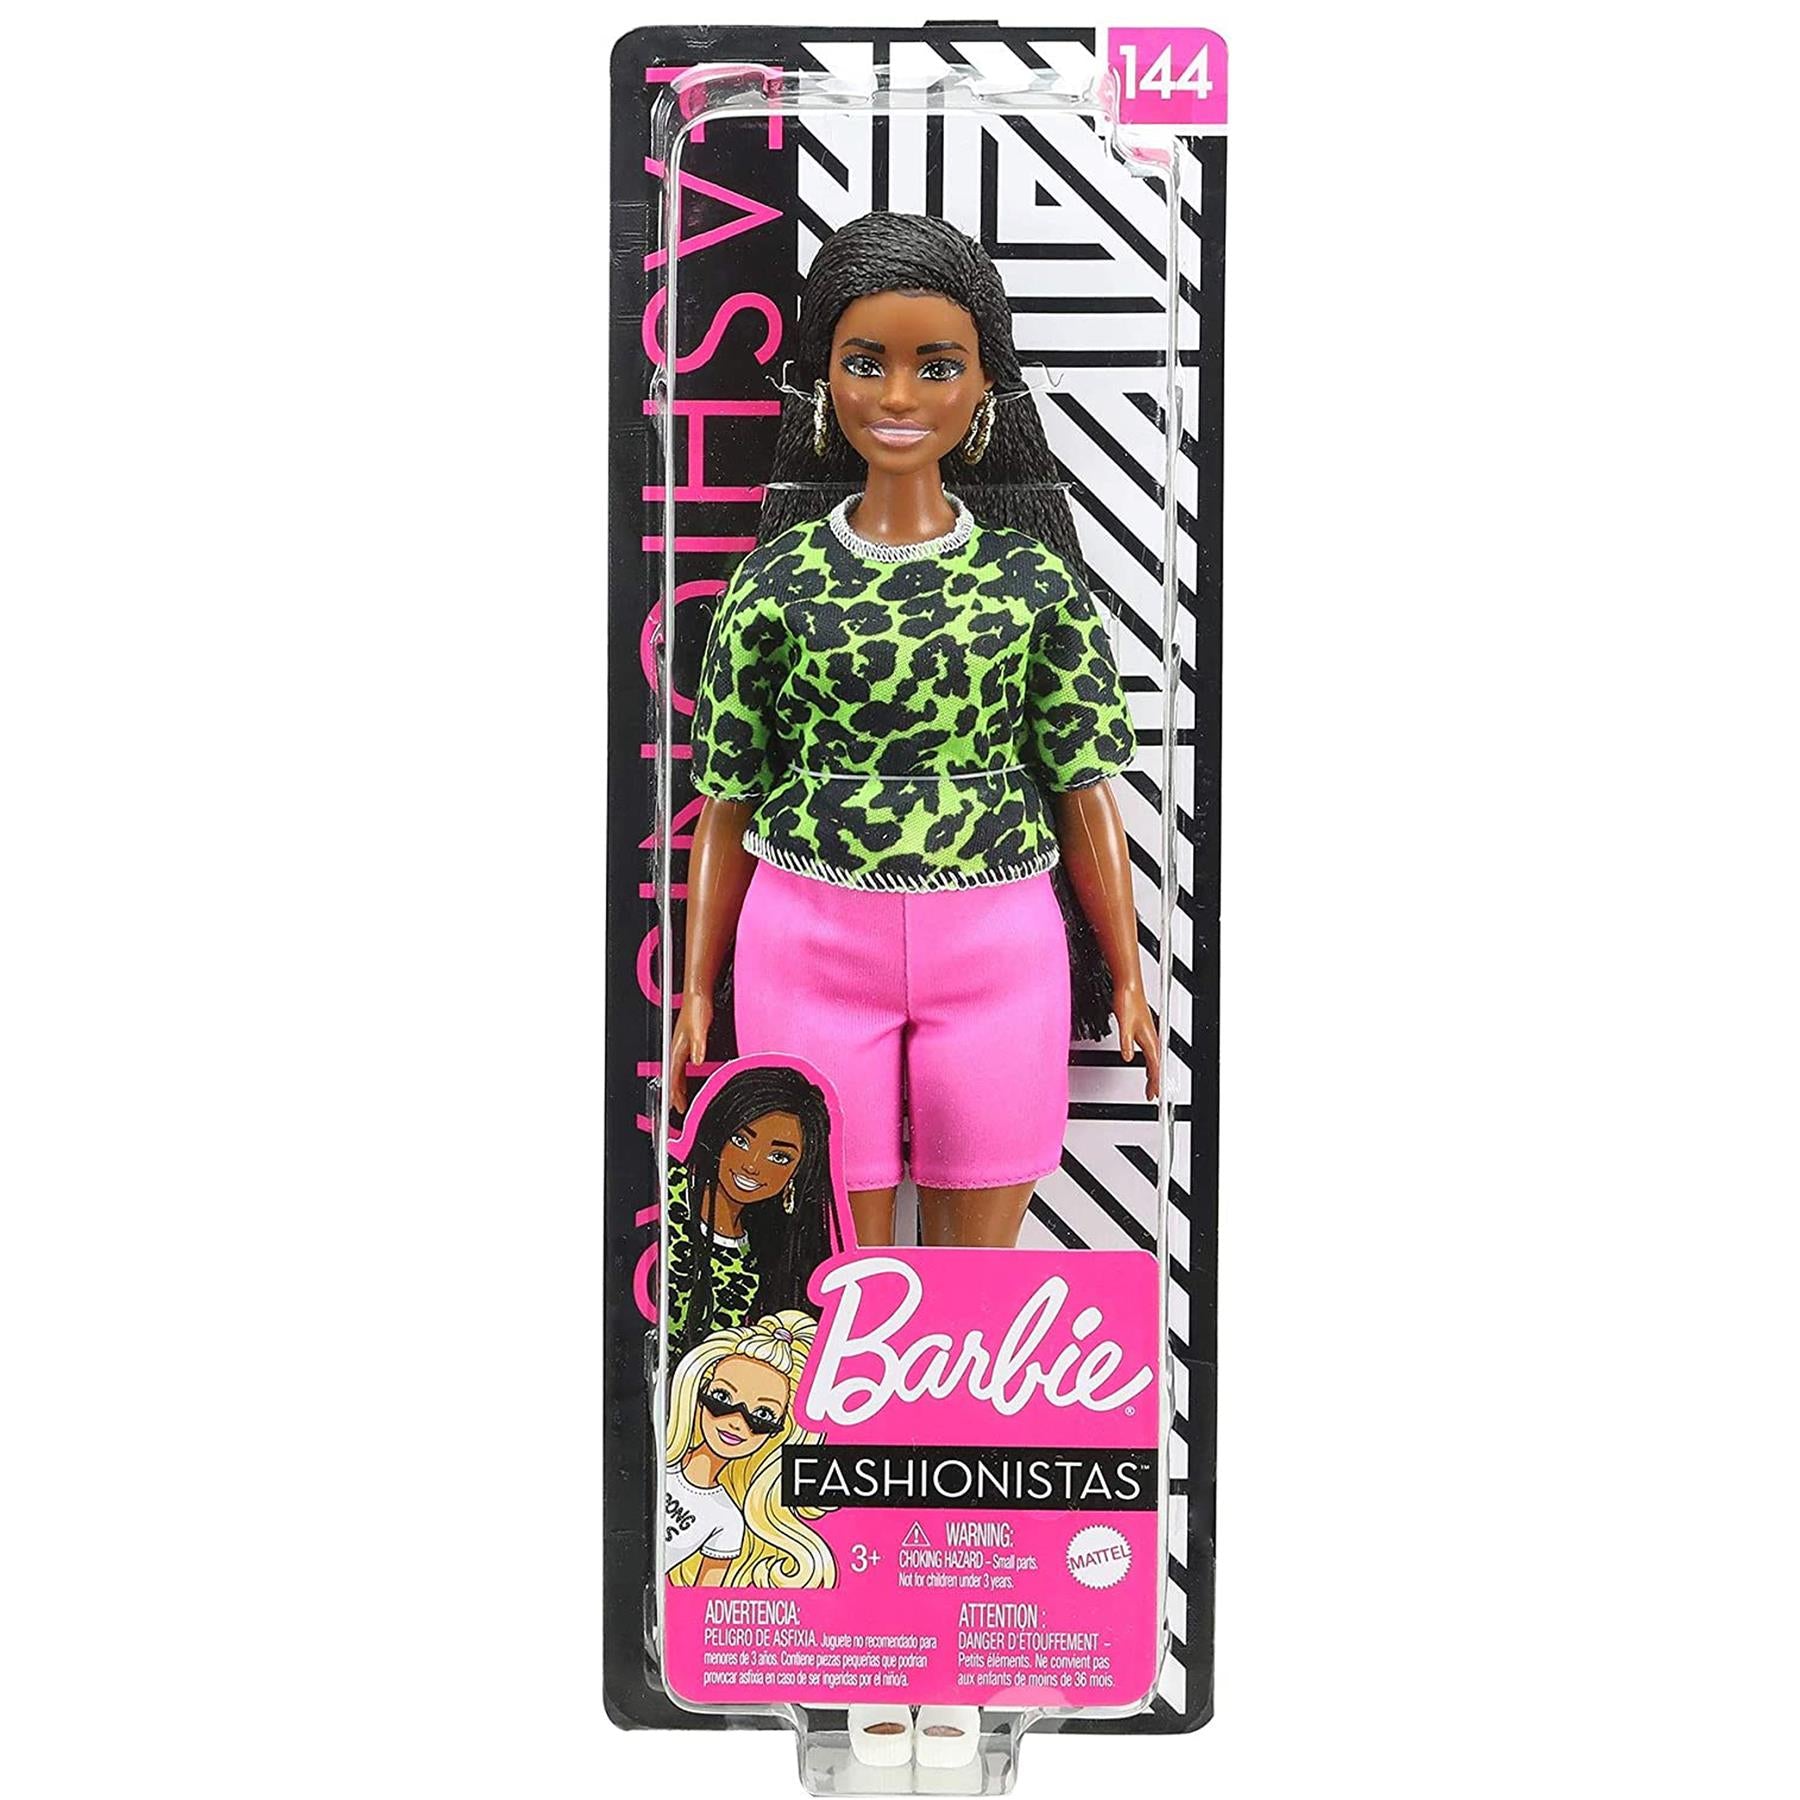 Barbie Fashionistas in Animal-Print Top